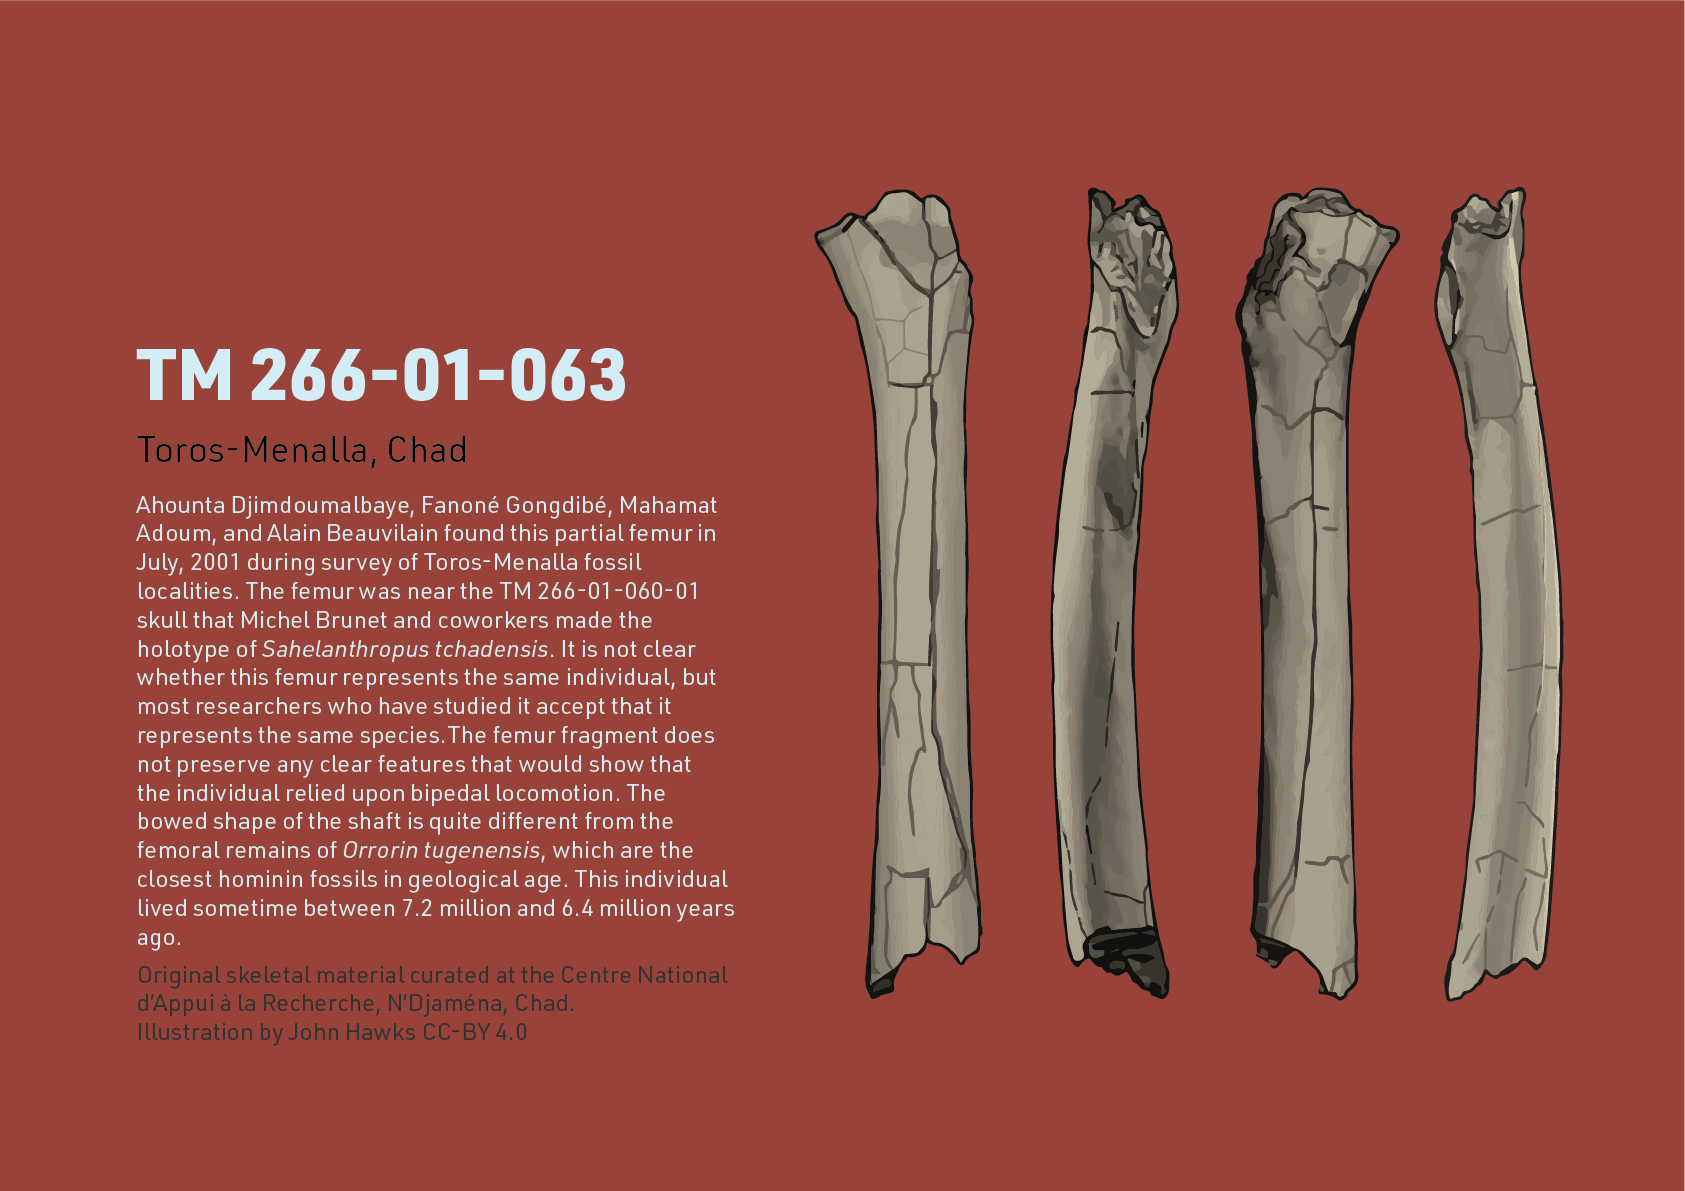 Fact sheet with information about the femur of Sahelanthropus tchadensis. 